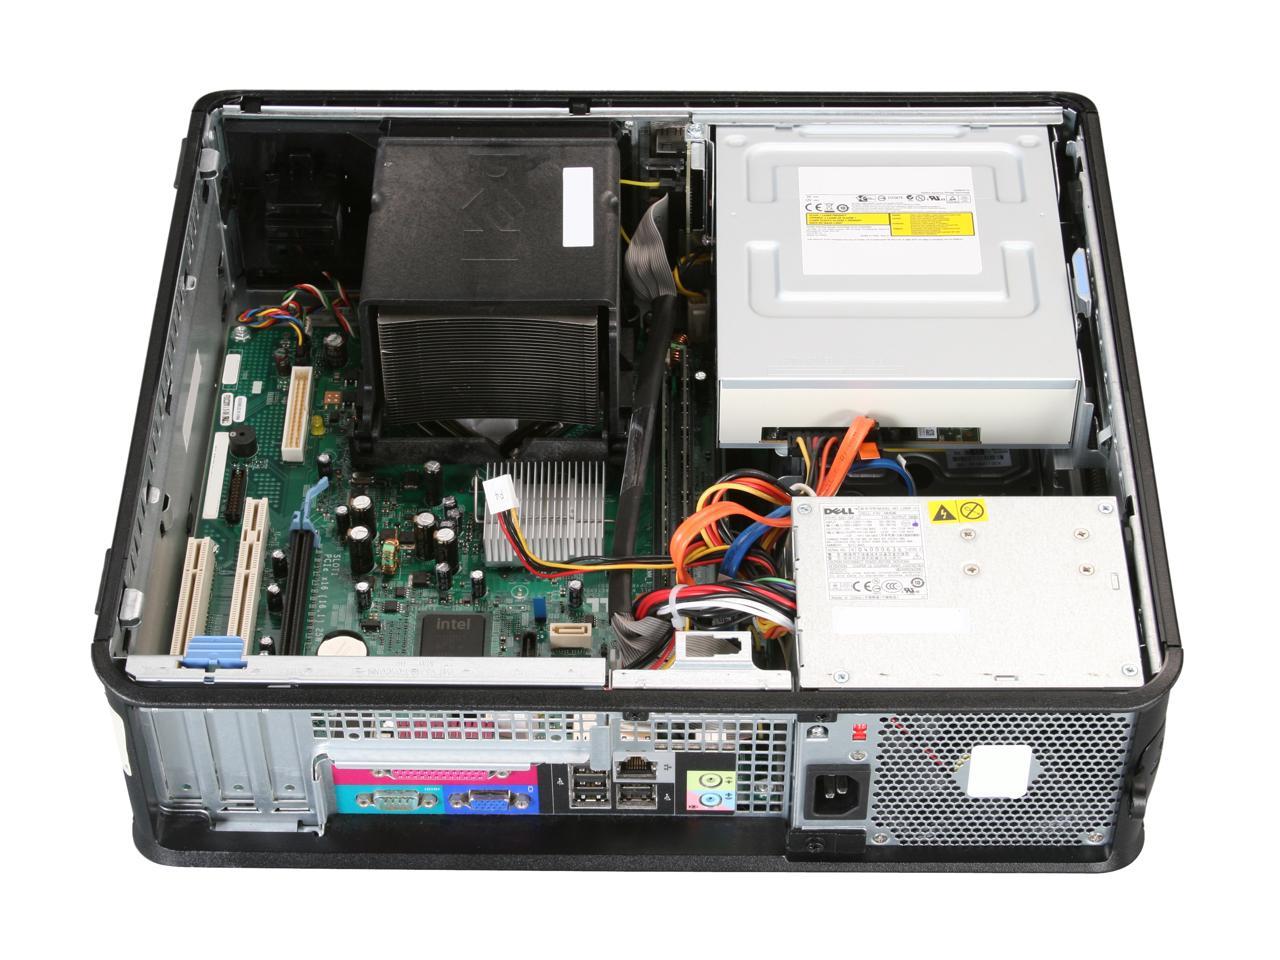 Refurbished: DELL Desktop PC GX755 Core 2 Duo 2.33 GHz 4GB 1 TB HDD